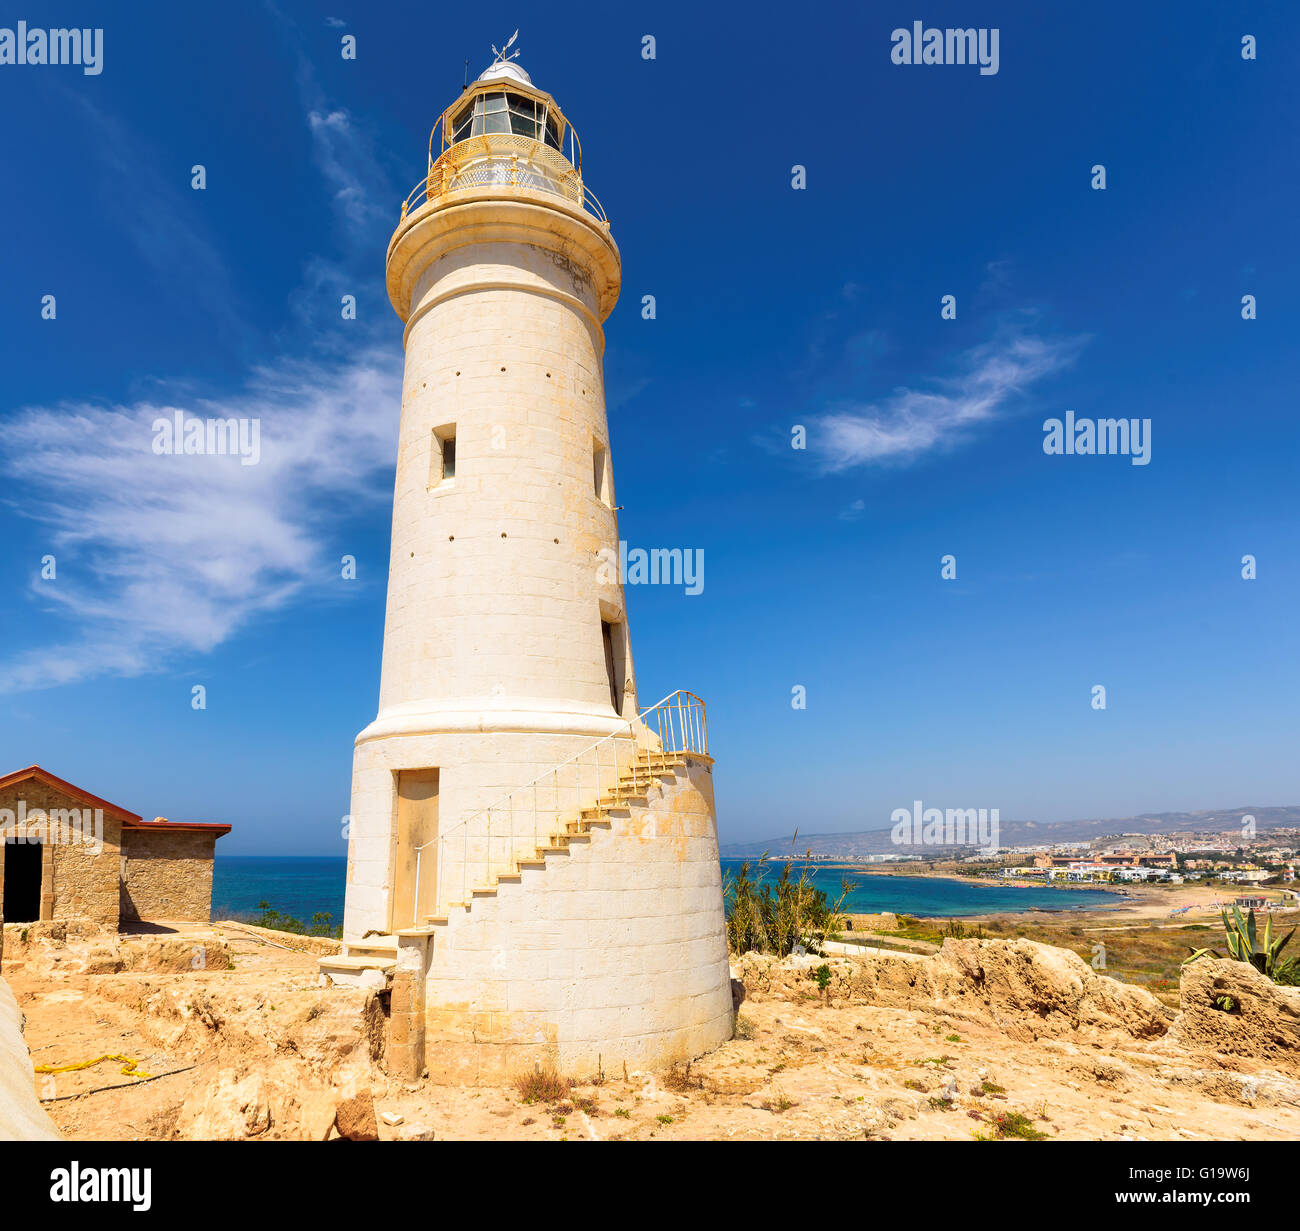 Old lighthouse on the Mediterranean coast Stock Photo